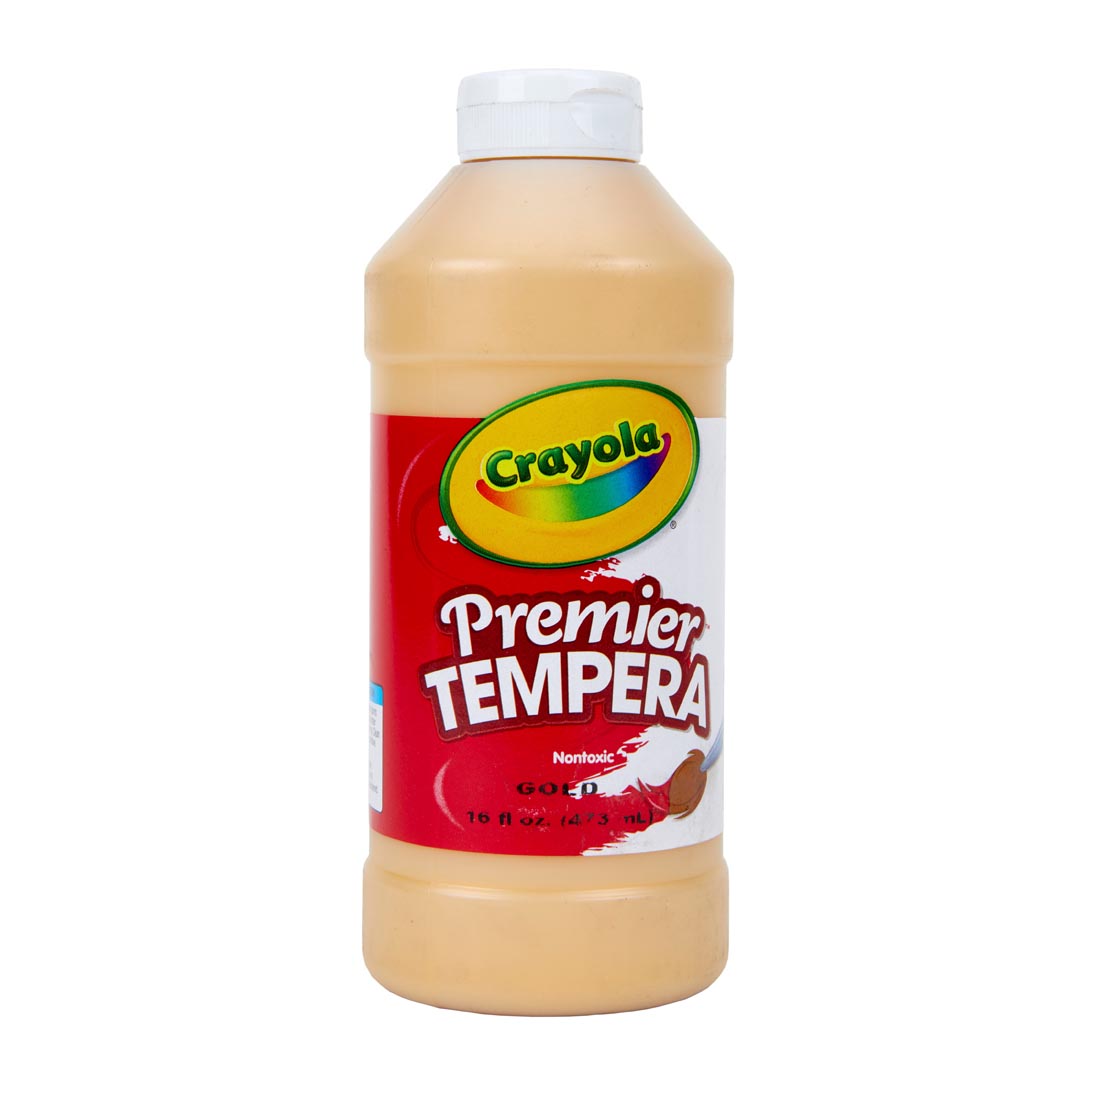 Bottle of Gold Crayola Premier Tempera Paint